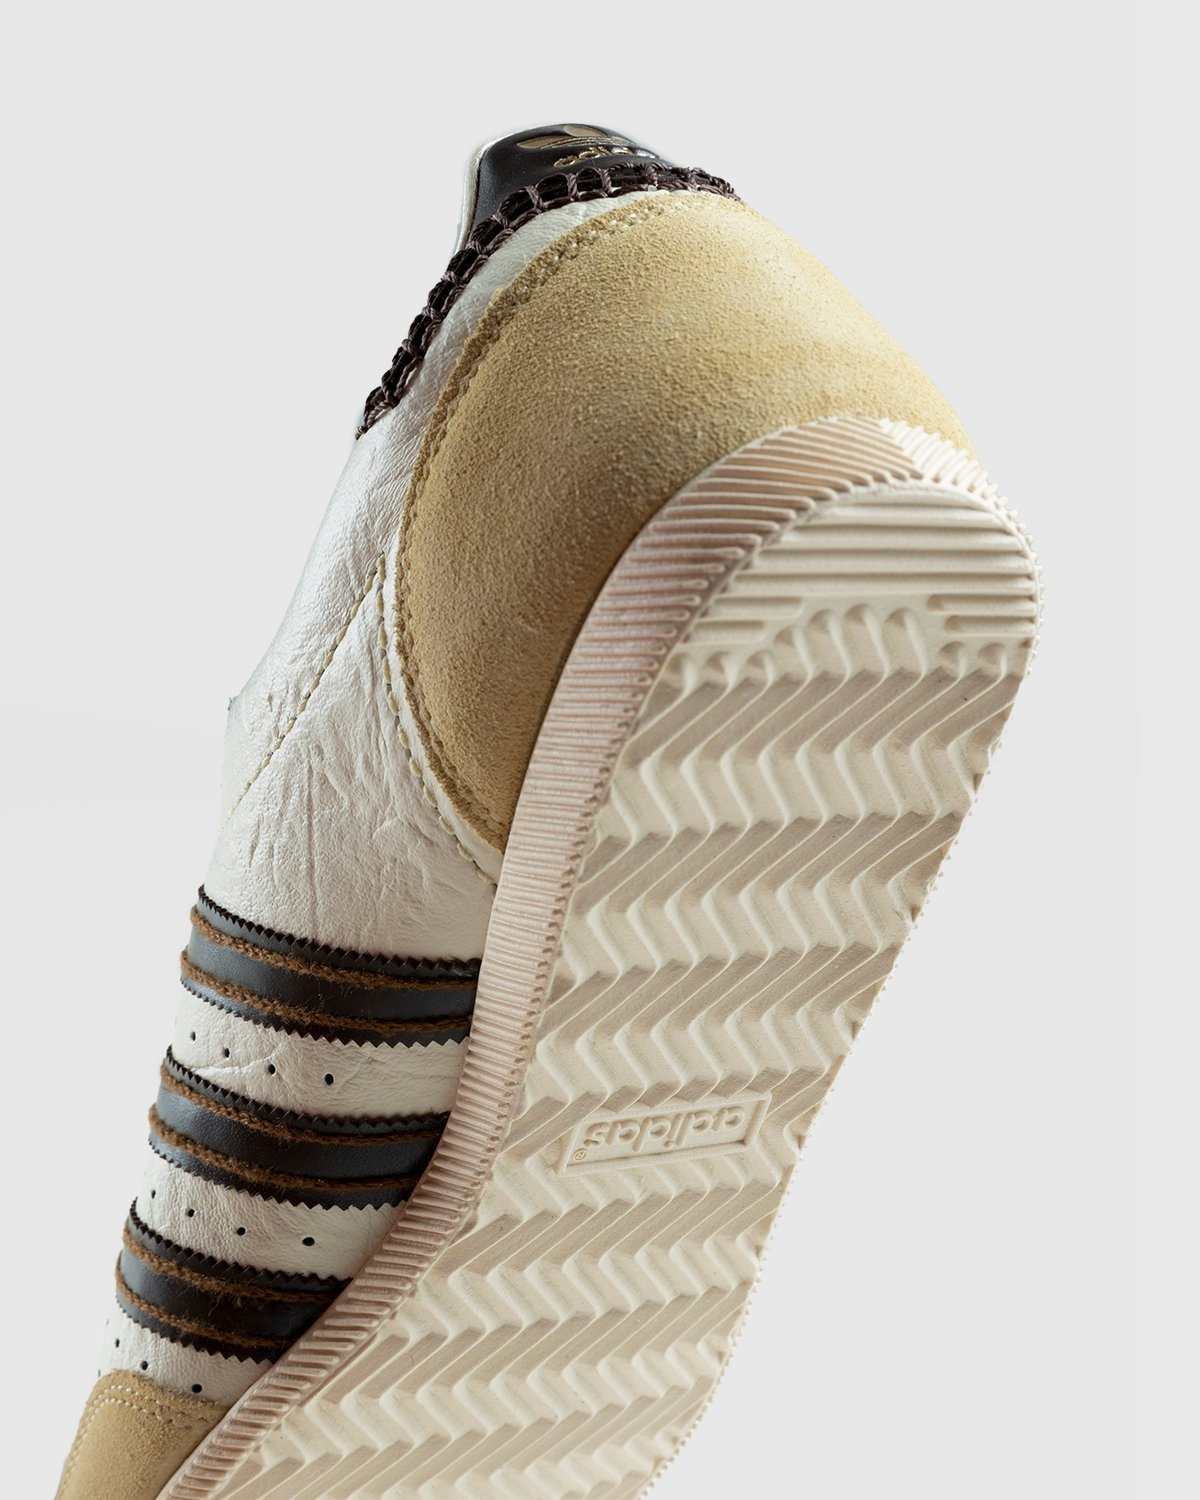 Adidas x Wales Bonner – Japan Cream White/Easy Yellow/Dark Brown - Low Top Sneakers - White - Image 6